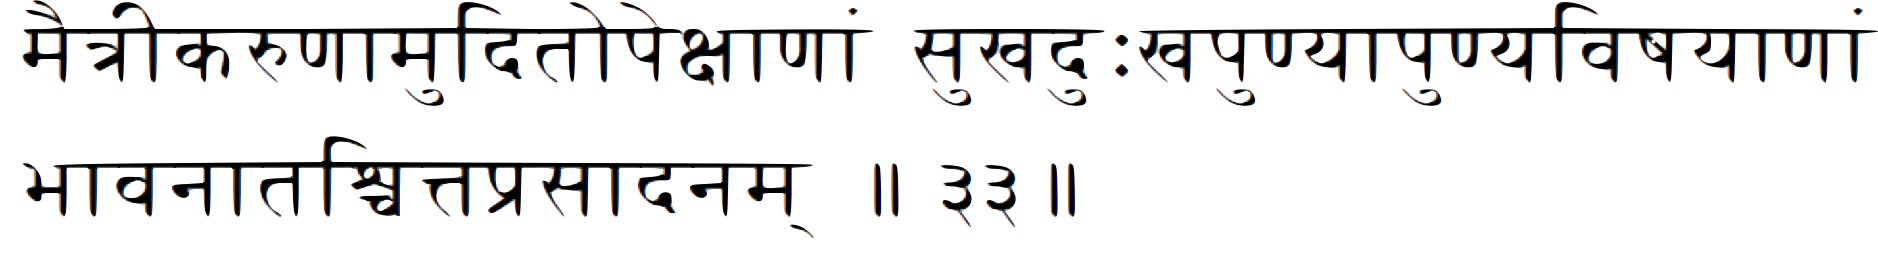 sutra 33 Maitri karuna muditupekshaanaam, sukhdukhpunyaapunyavishayanaam, bhaavanaatah chitta prasaadanam